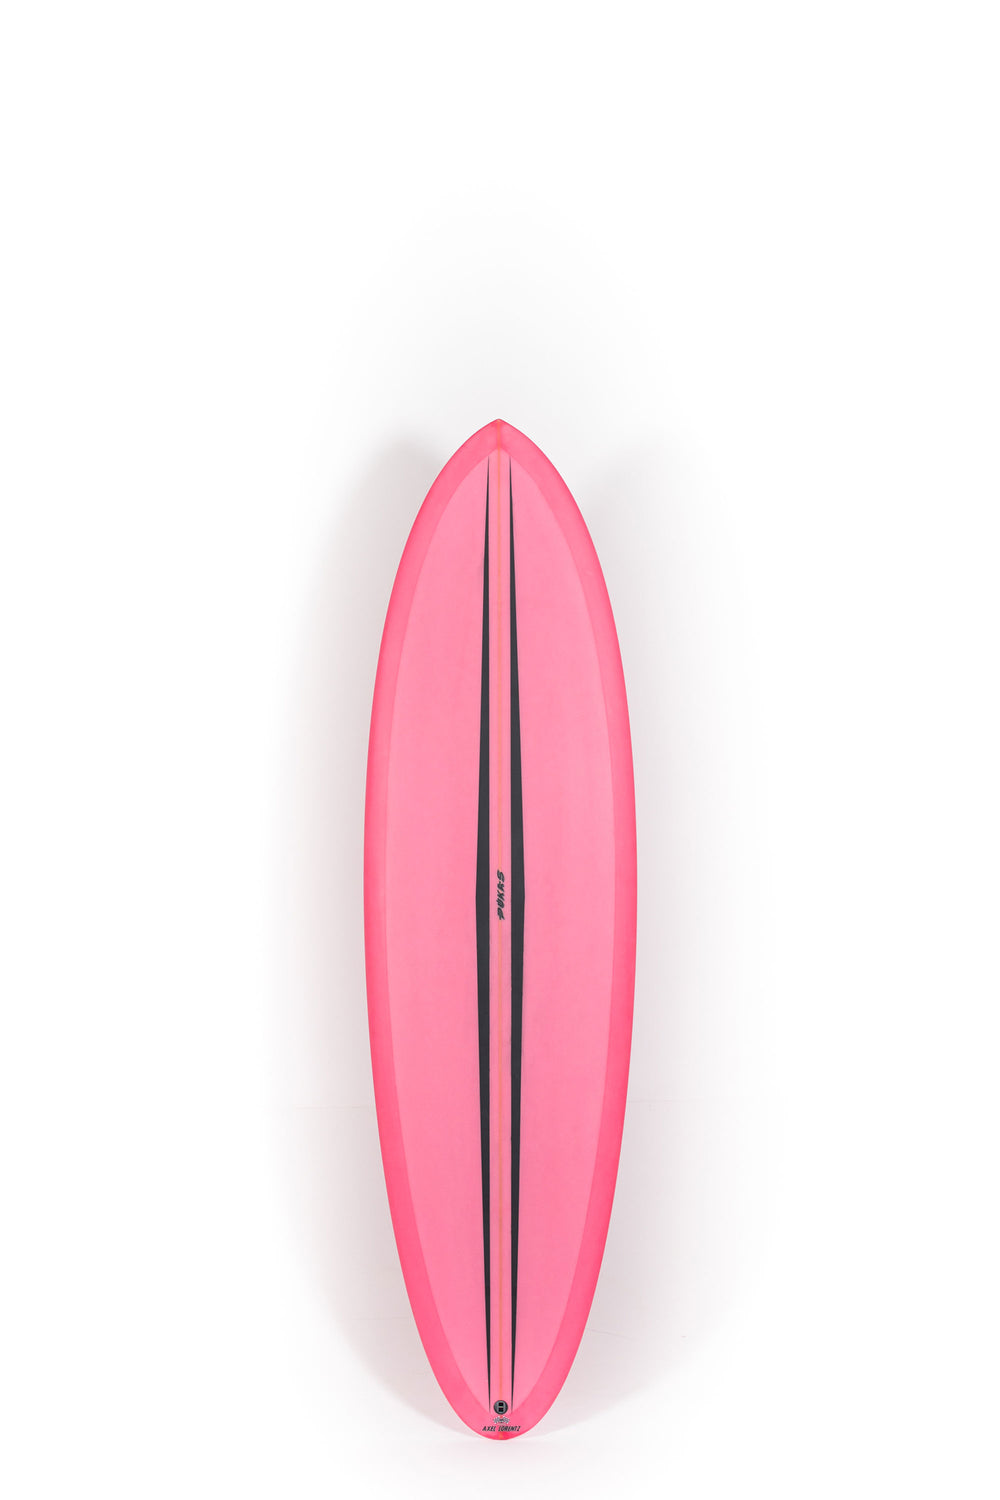    Pukas-Surf-Shop-Pukas-Surfboards-La-Cote-Axel-Lorentz-6_6_-AX09621